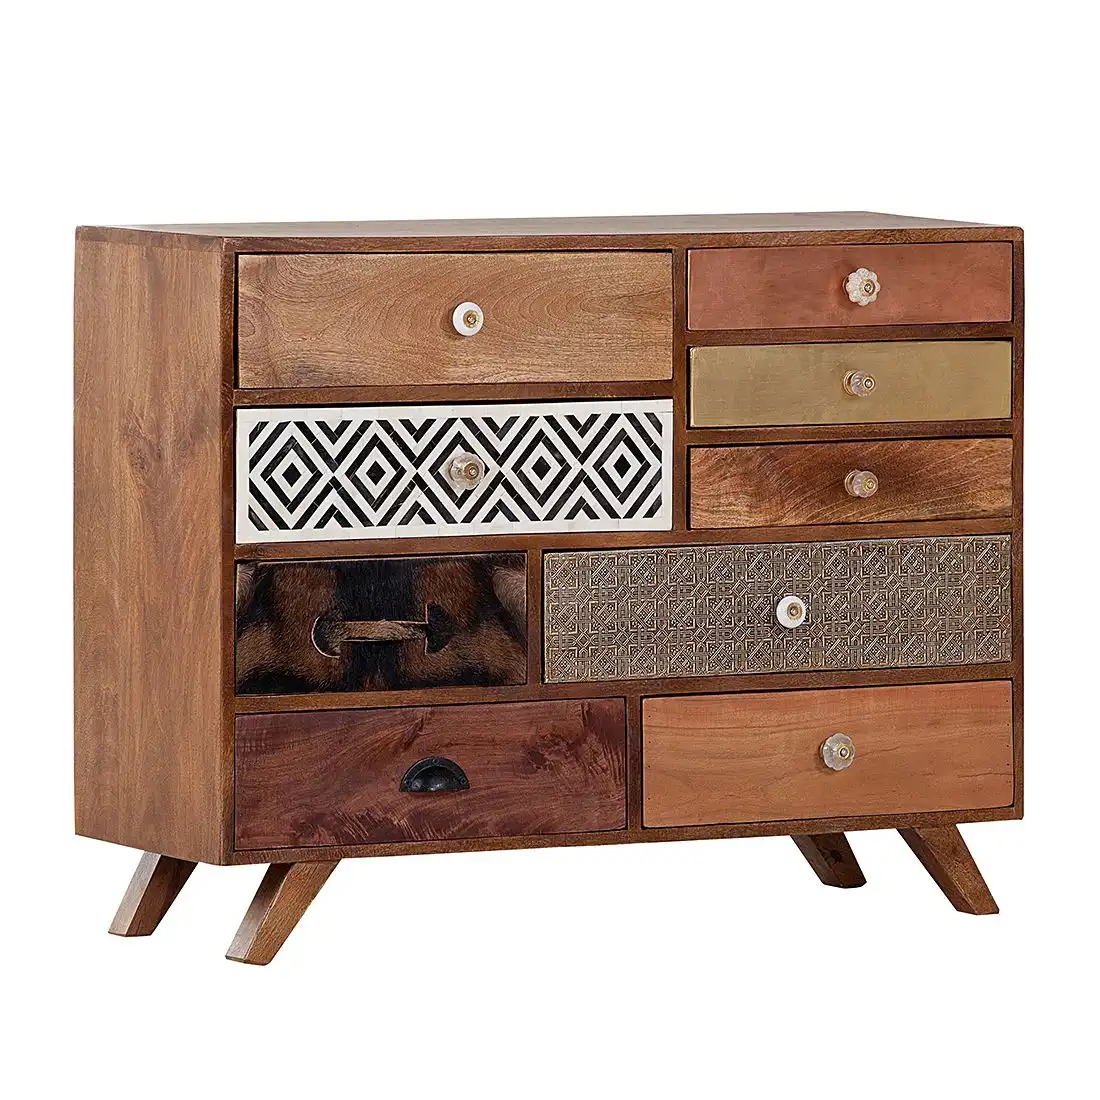 Mango wood cabinet with 9 drawers - popular handicrafts